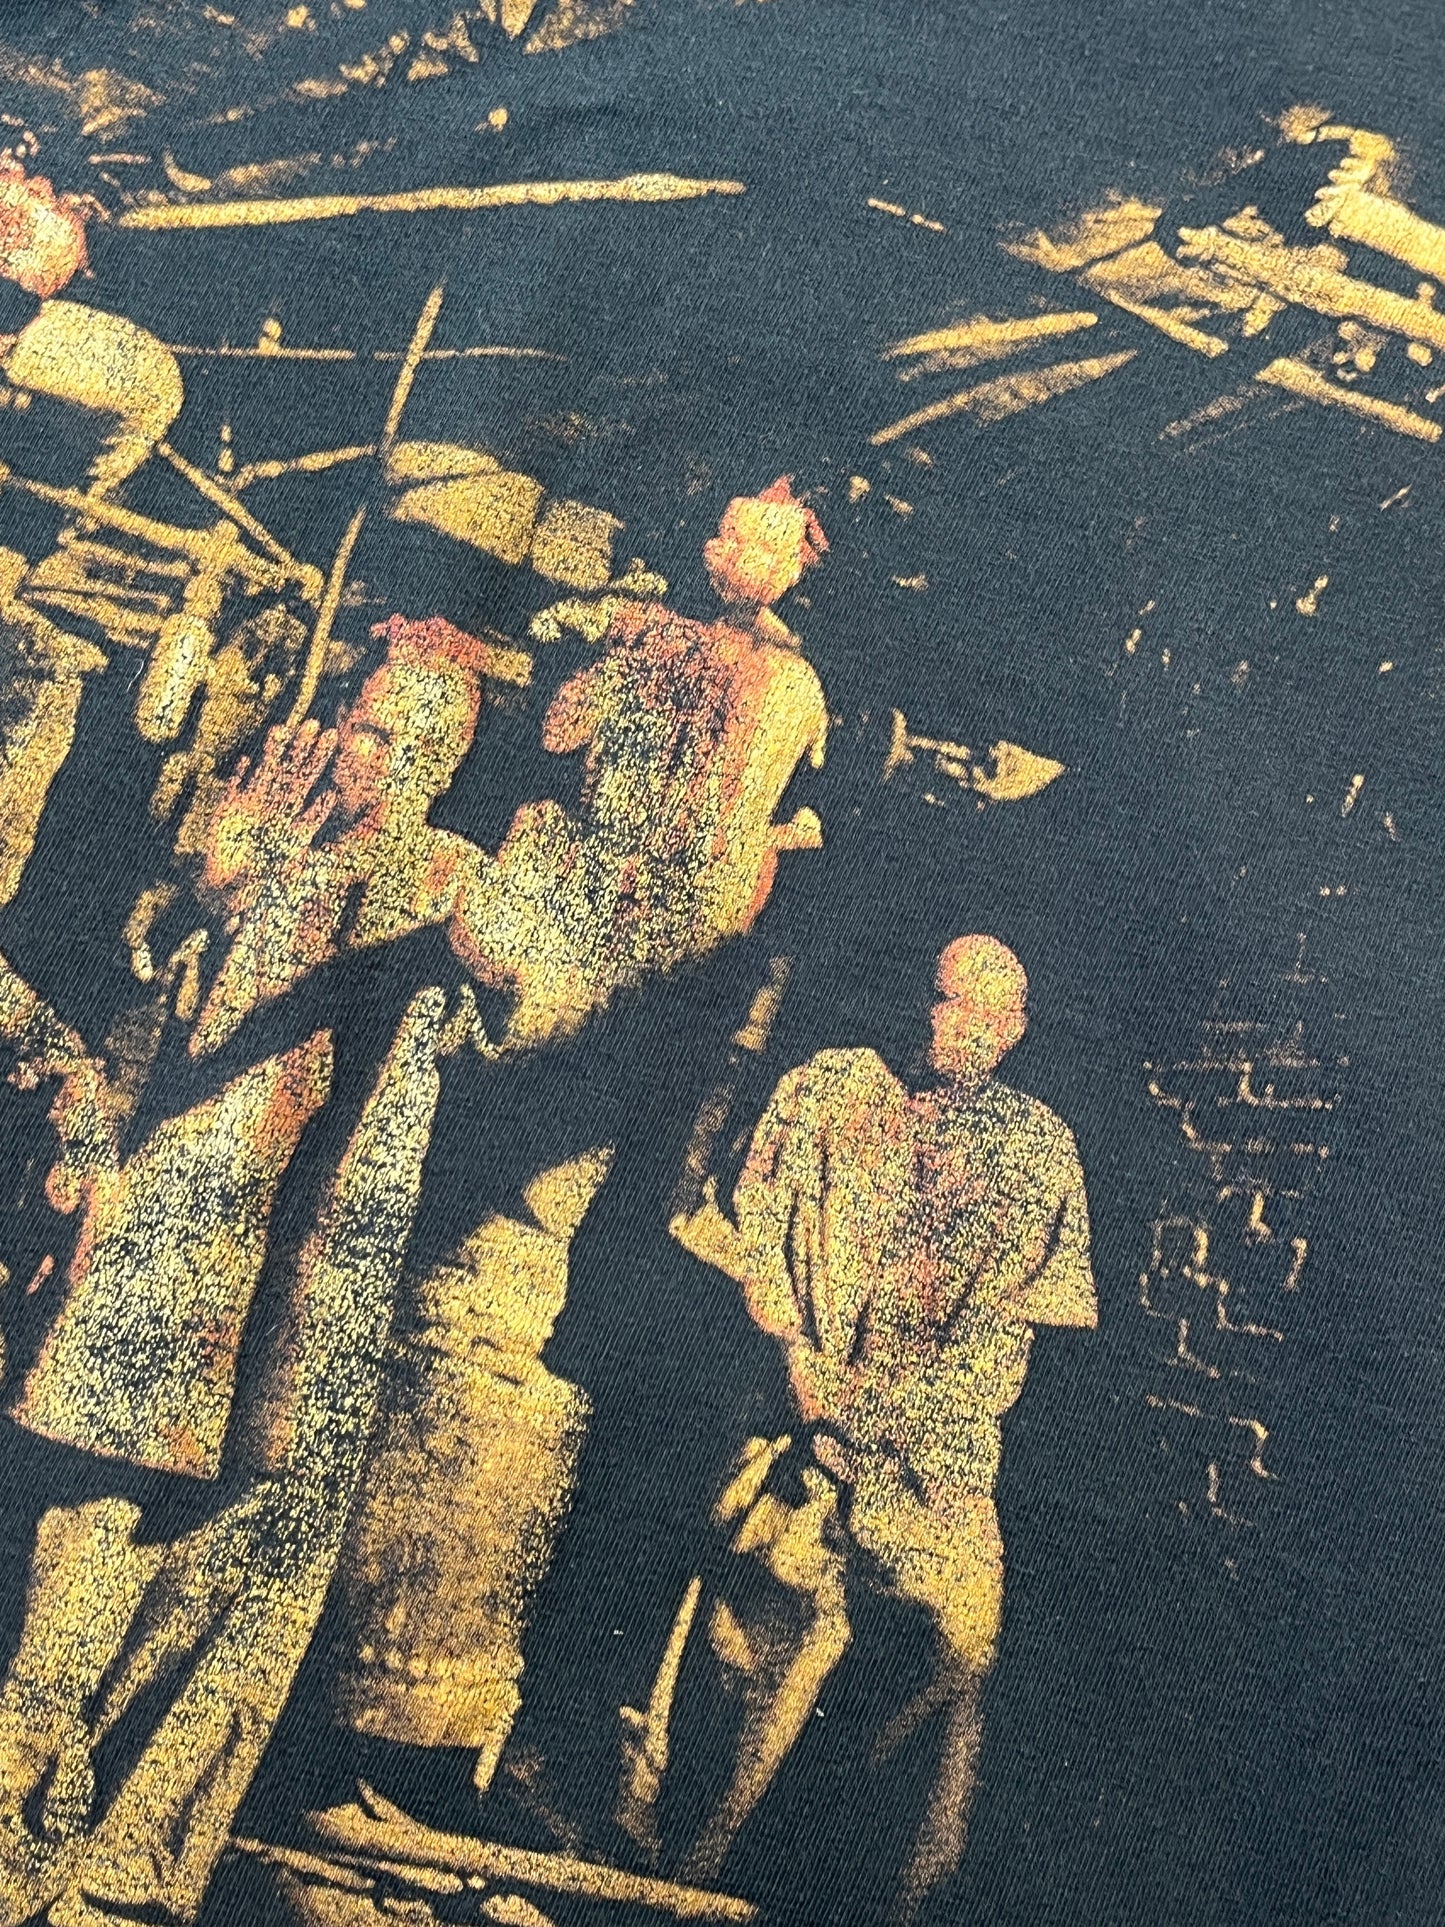 Vintage Mudvayne T-Shirt Y2K Band Tee Chemistry